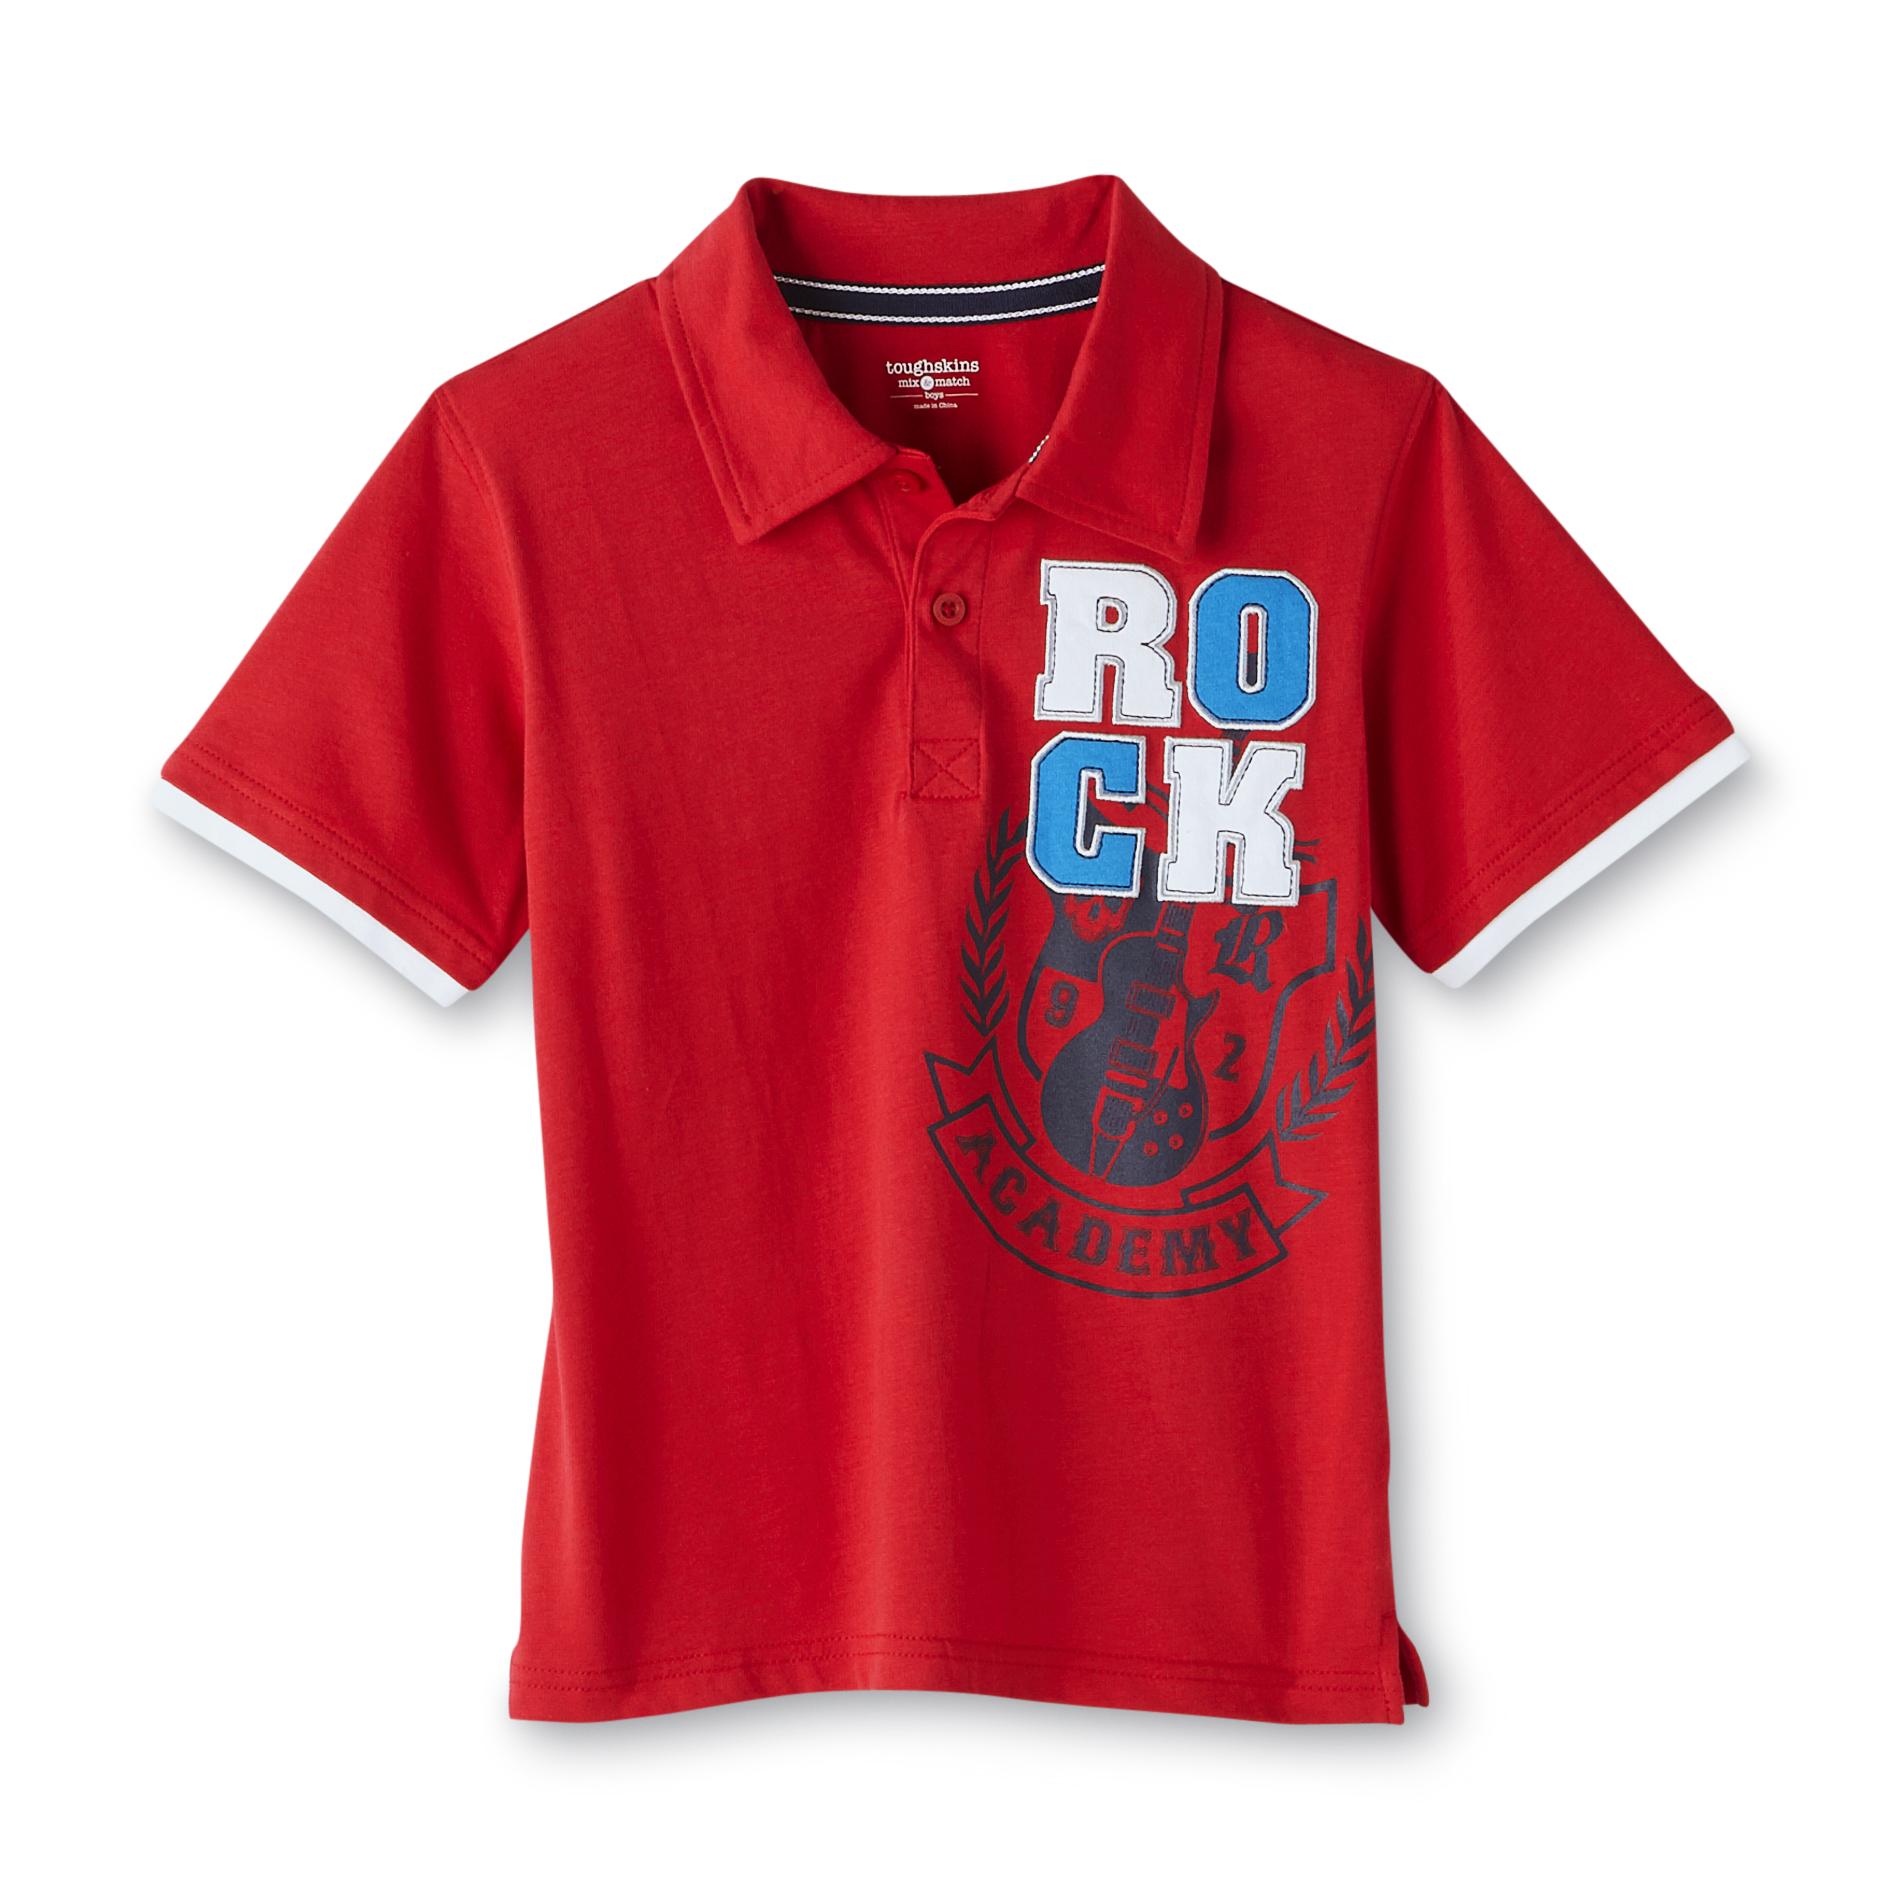 Toughskins Boy's Graphic Polo Shirt - Rock Academy